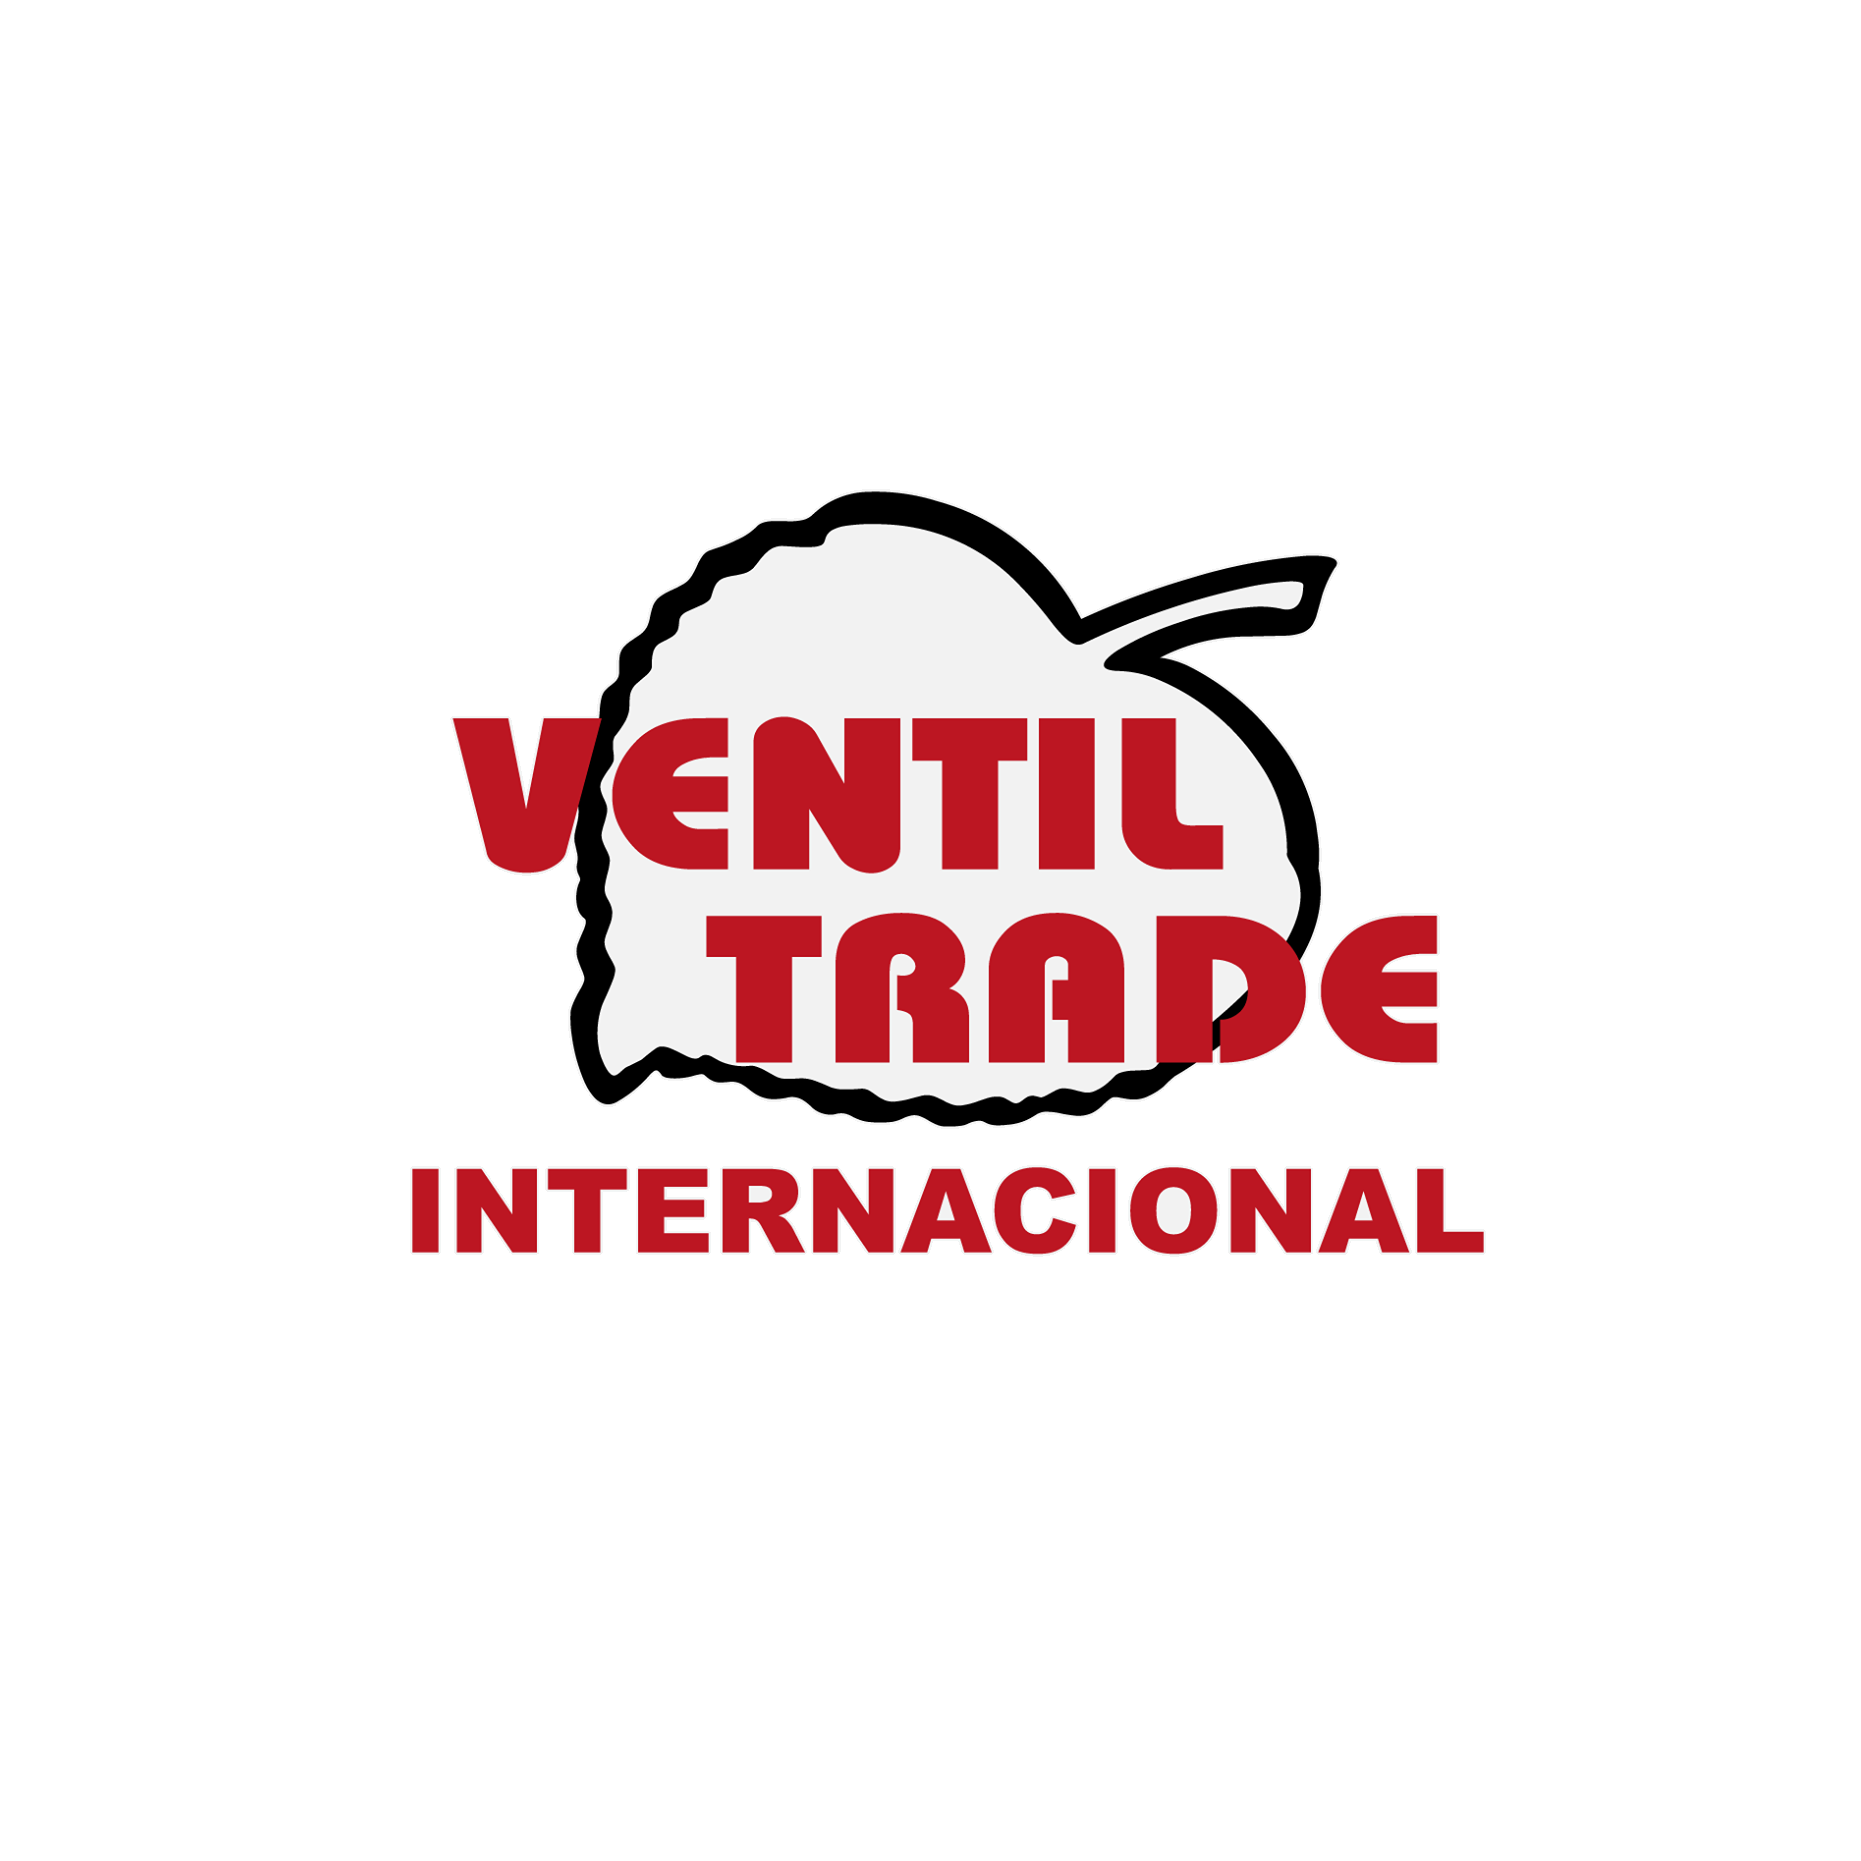 Ventil Trade Internacional logo